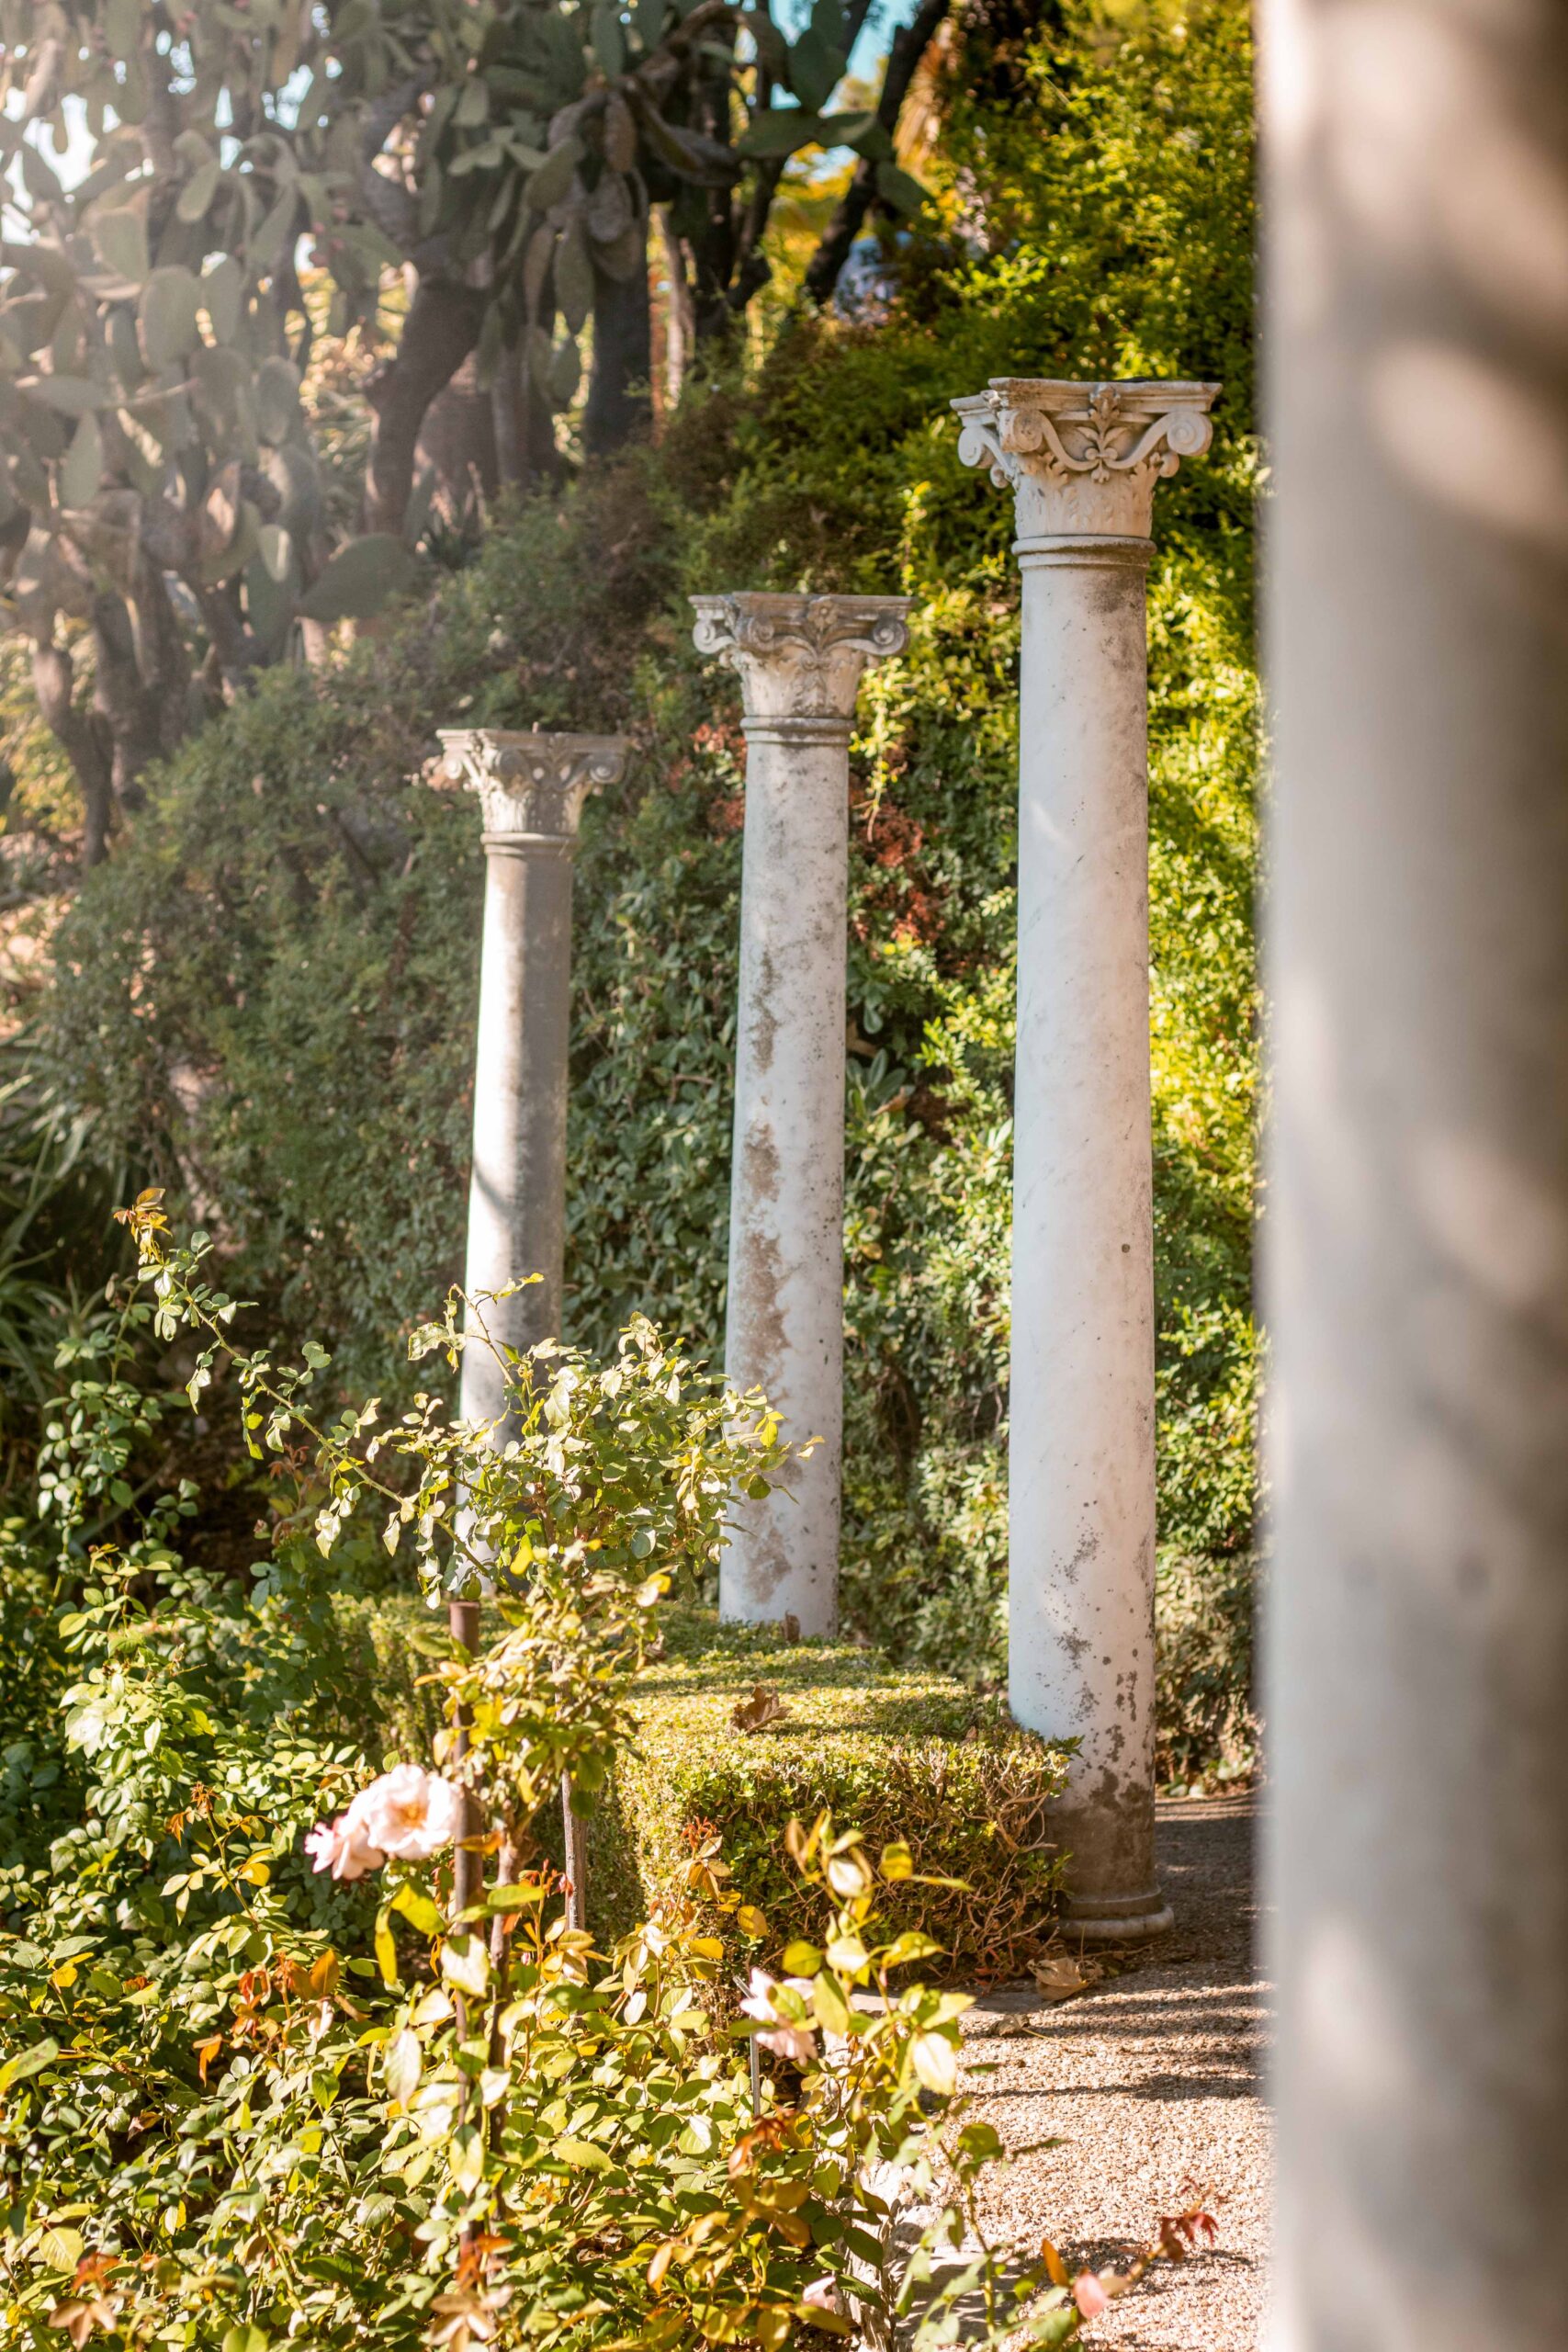 Decorative columns in the Rose Garden ("La Roseraie") of Villa Ephrussi de Rothschild in Saint-Jean-Cap-Ferrat, France